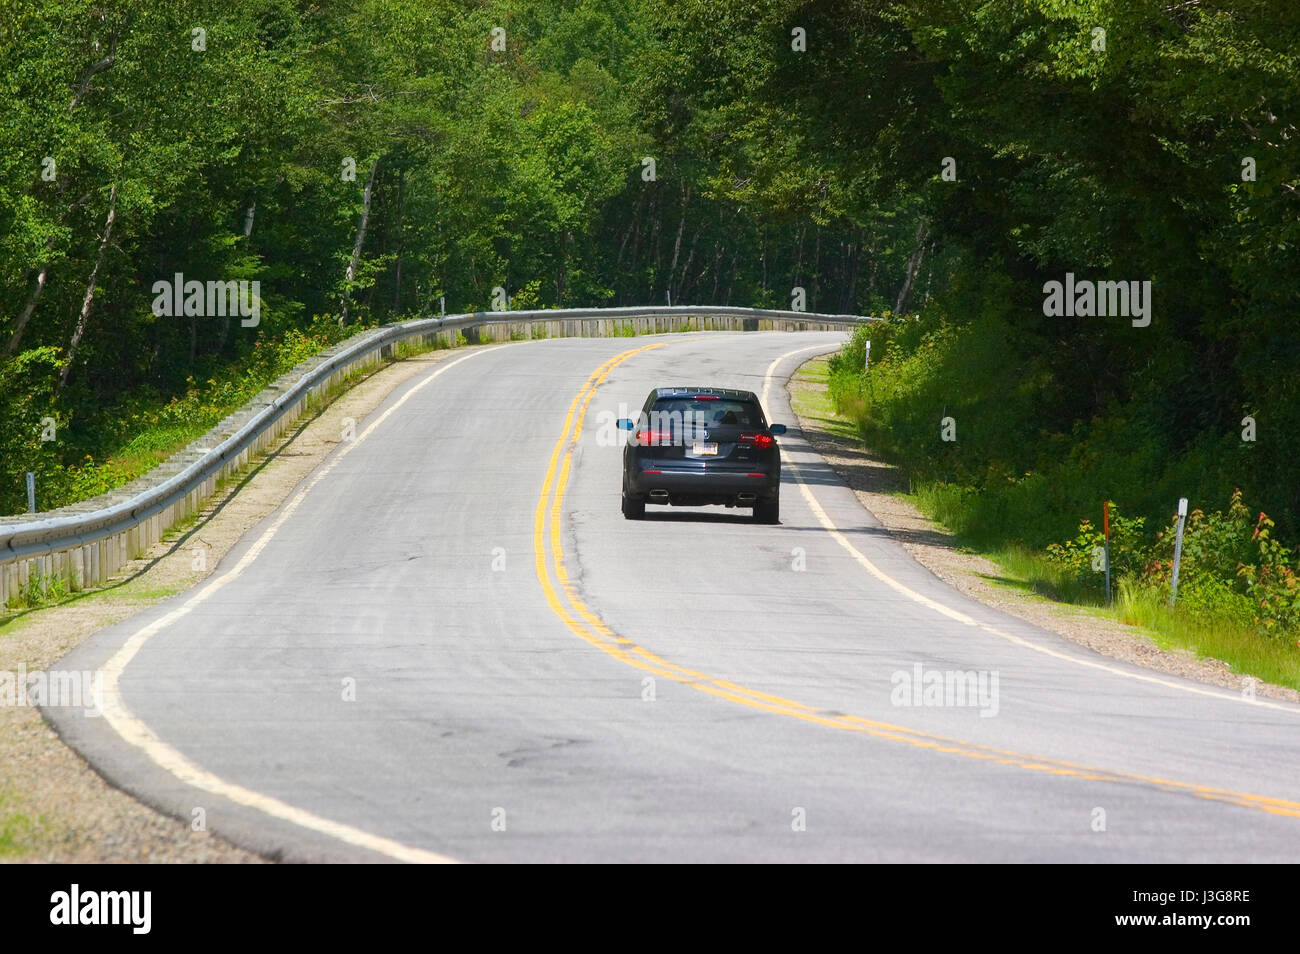 Lungo l'autostrada Kancamangus nelle White Mountains National Forest, New Hampshire, STATI UNITI D'AMERICA Foto Stock